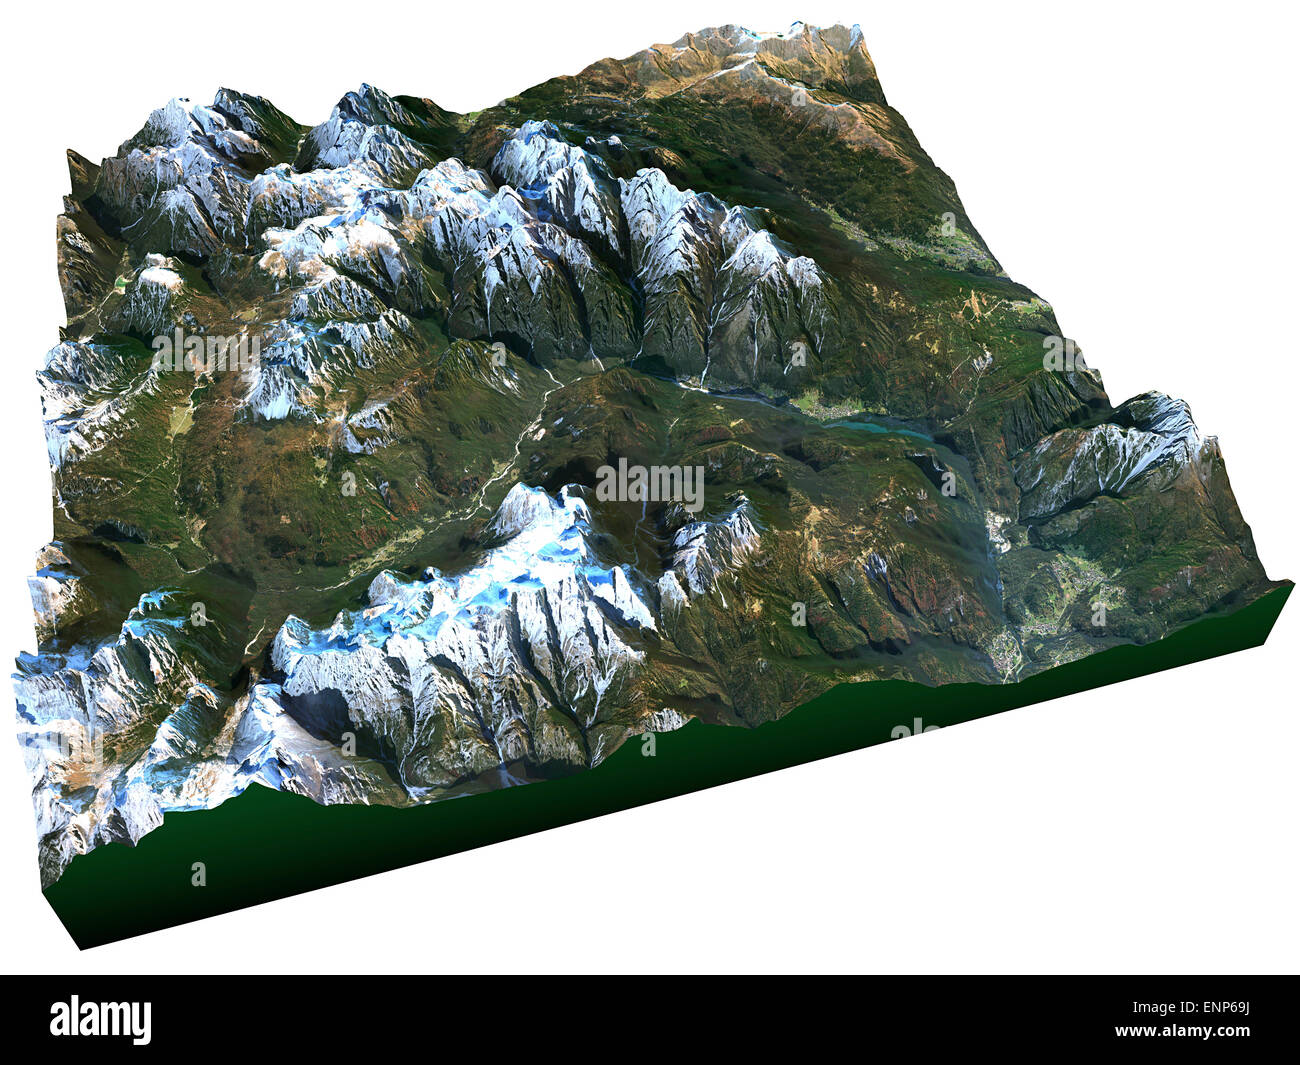 Indigo dolomites, Italy satellite view isolated on white background Stock Photo